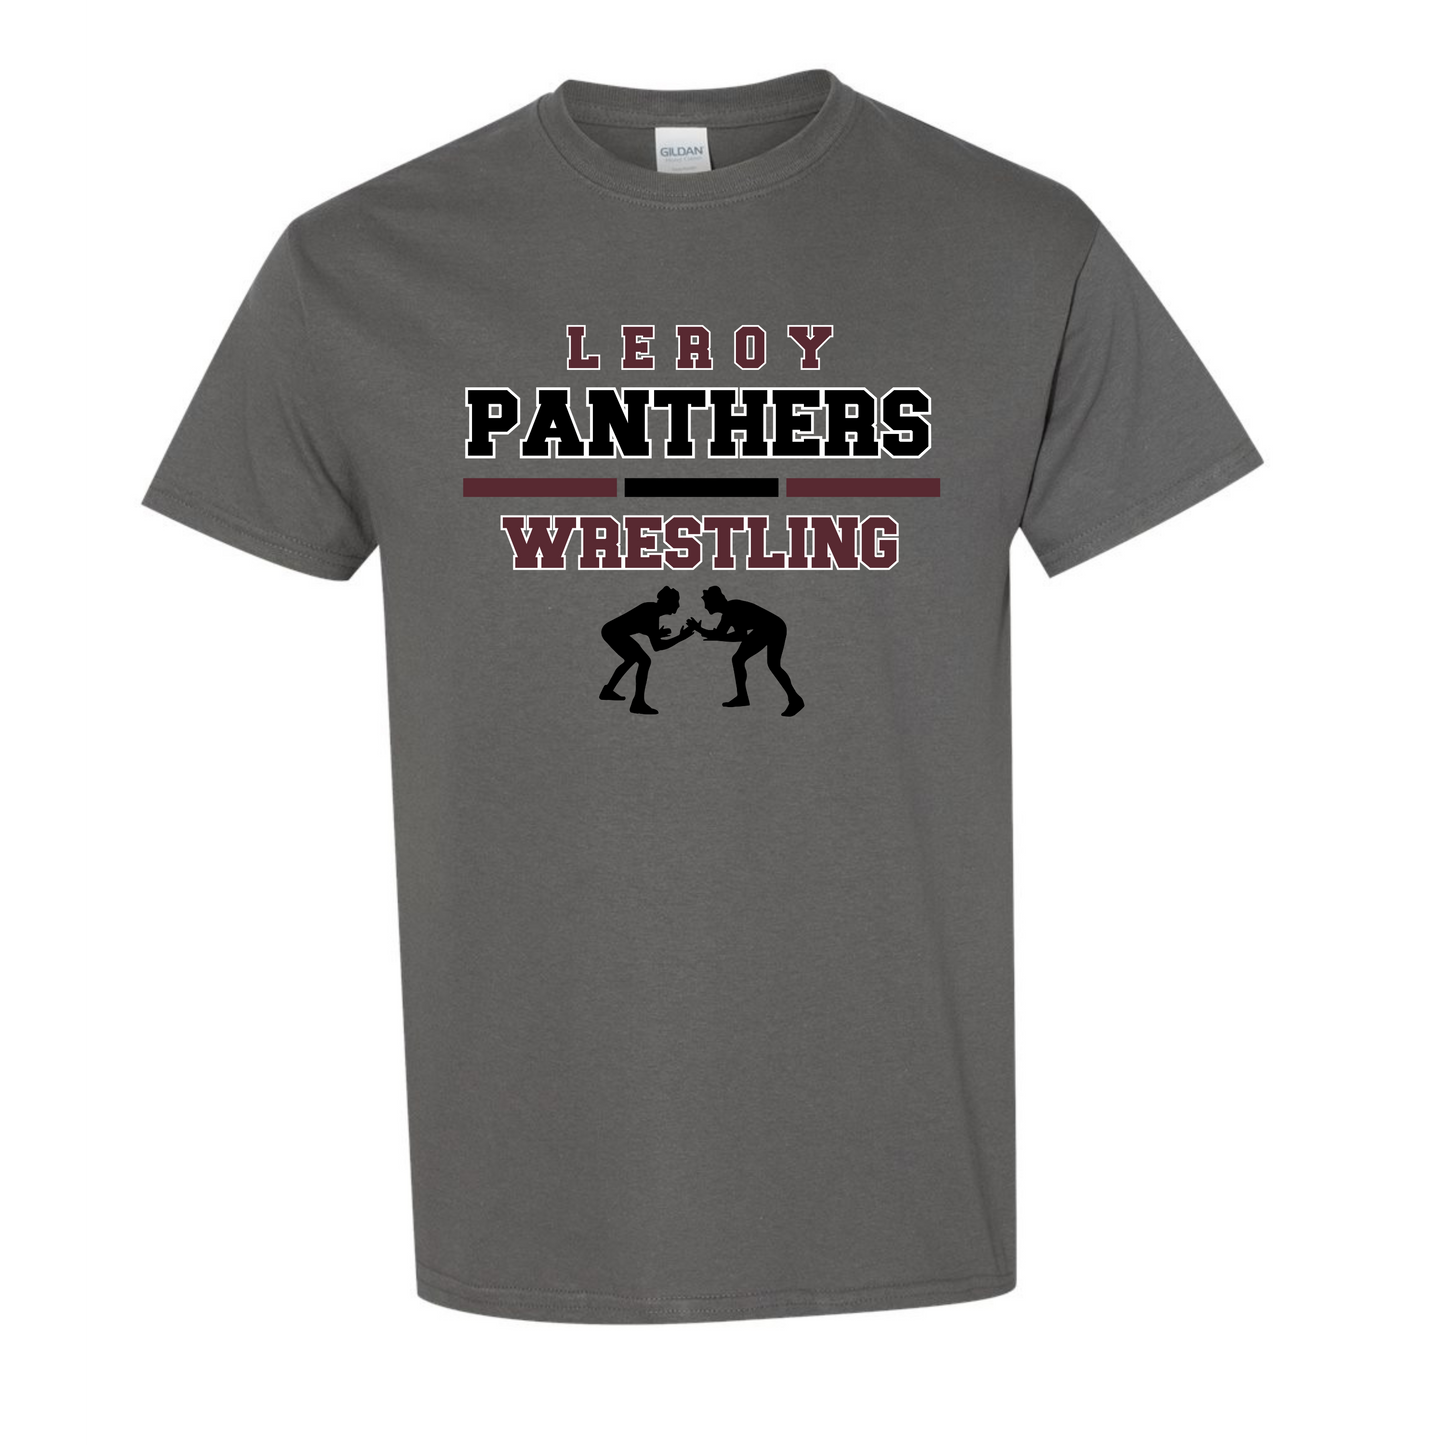 Leroy Panthers Wrestling